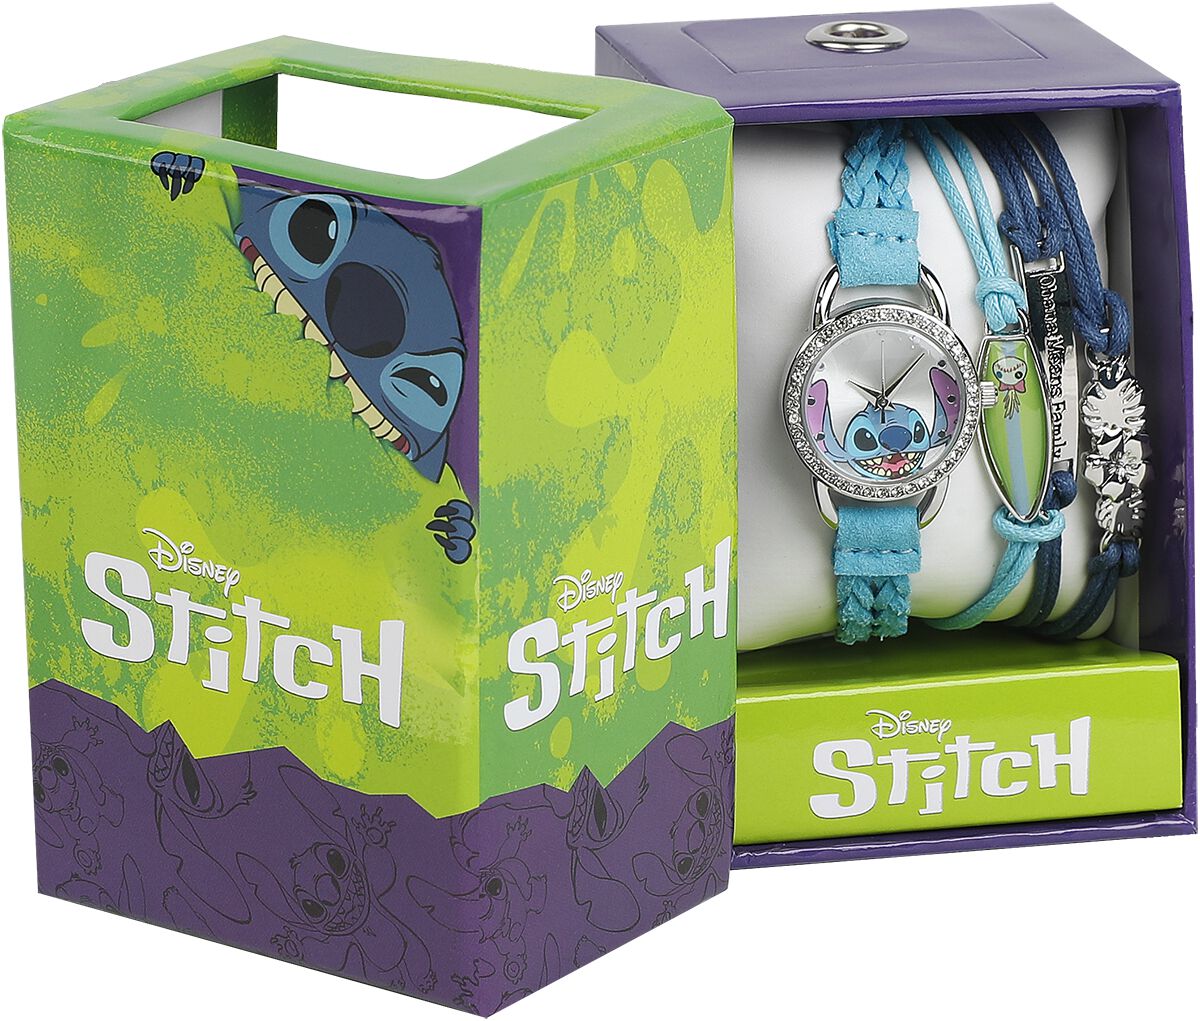 Stitch, Lilo & Stitch Montres bracelets